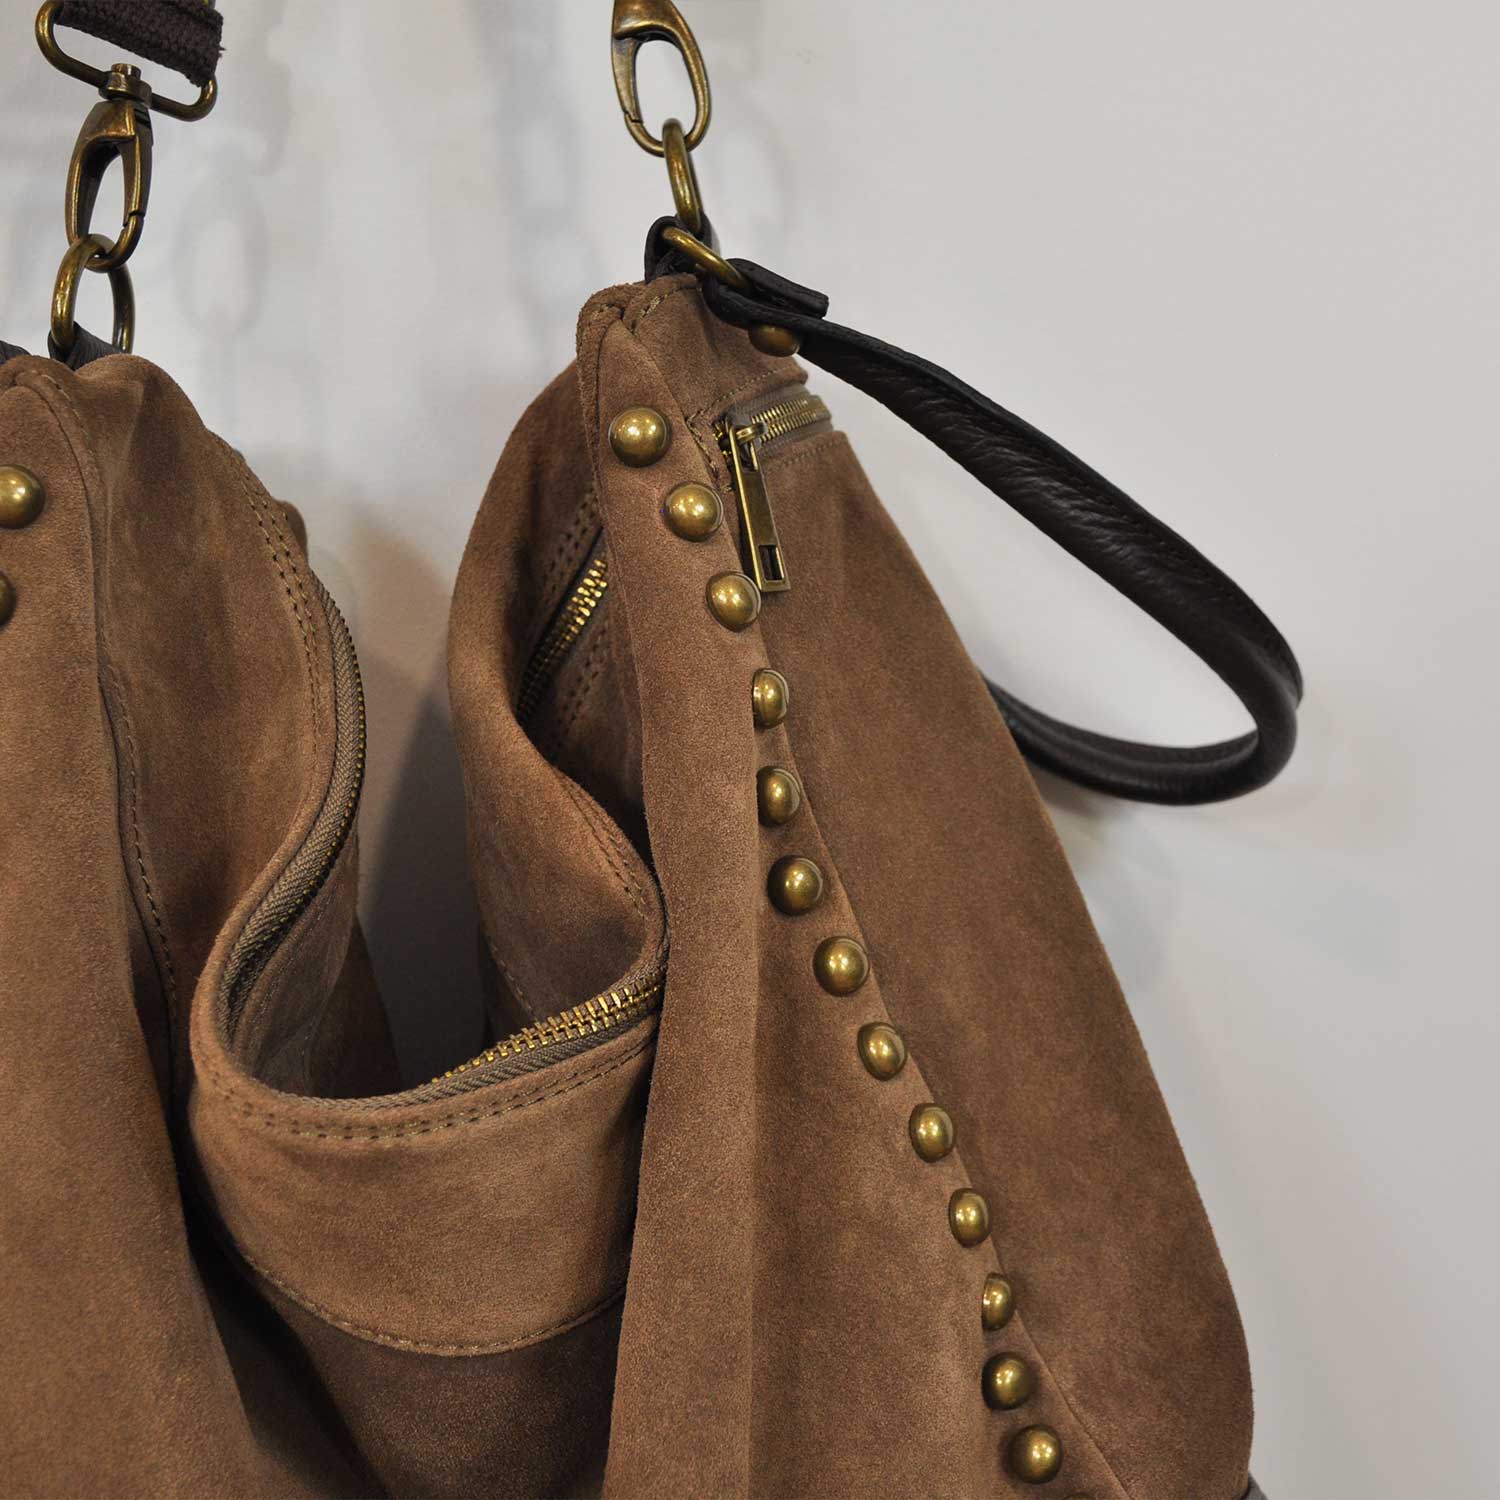 Studded leather bag